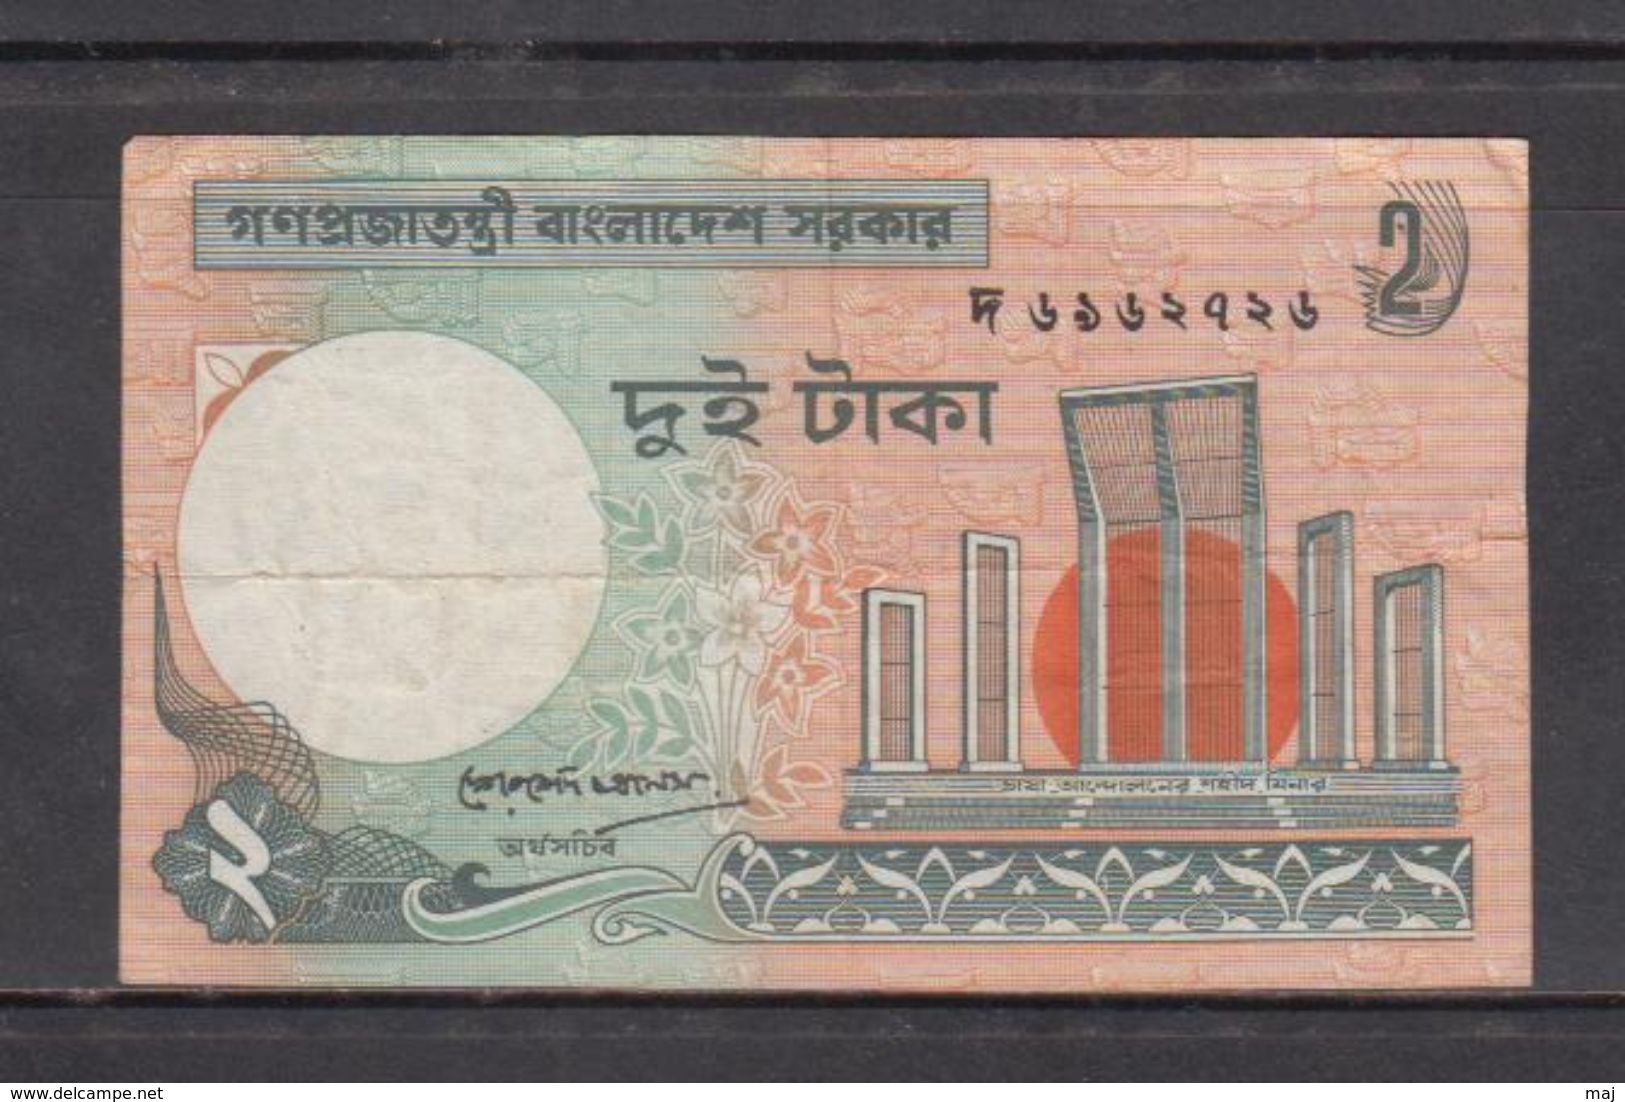 BANGLADESH 2 Taka Note Old Issue Bird, CONDITION:  As Per Scan - Bangladesh